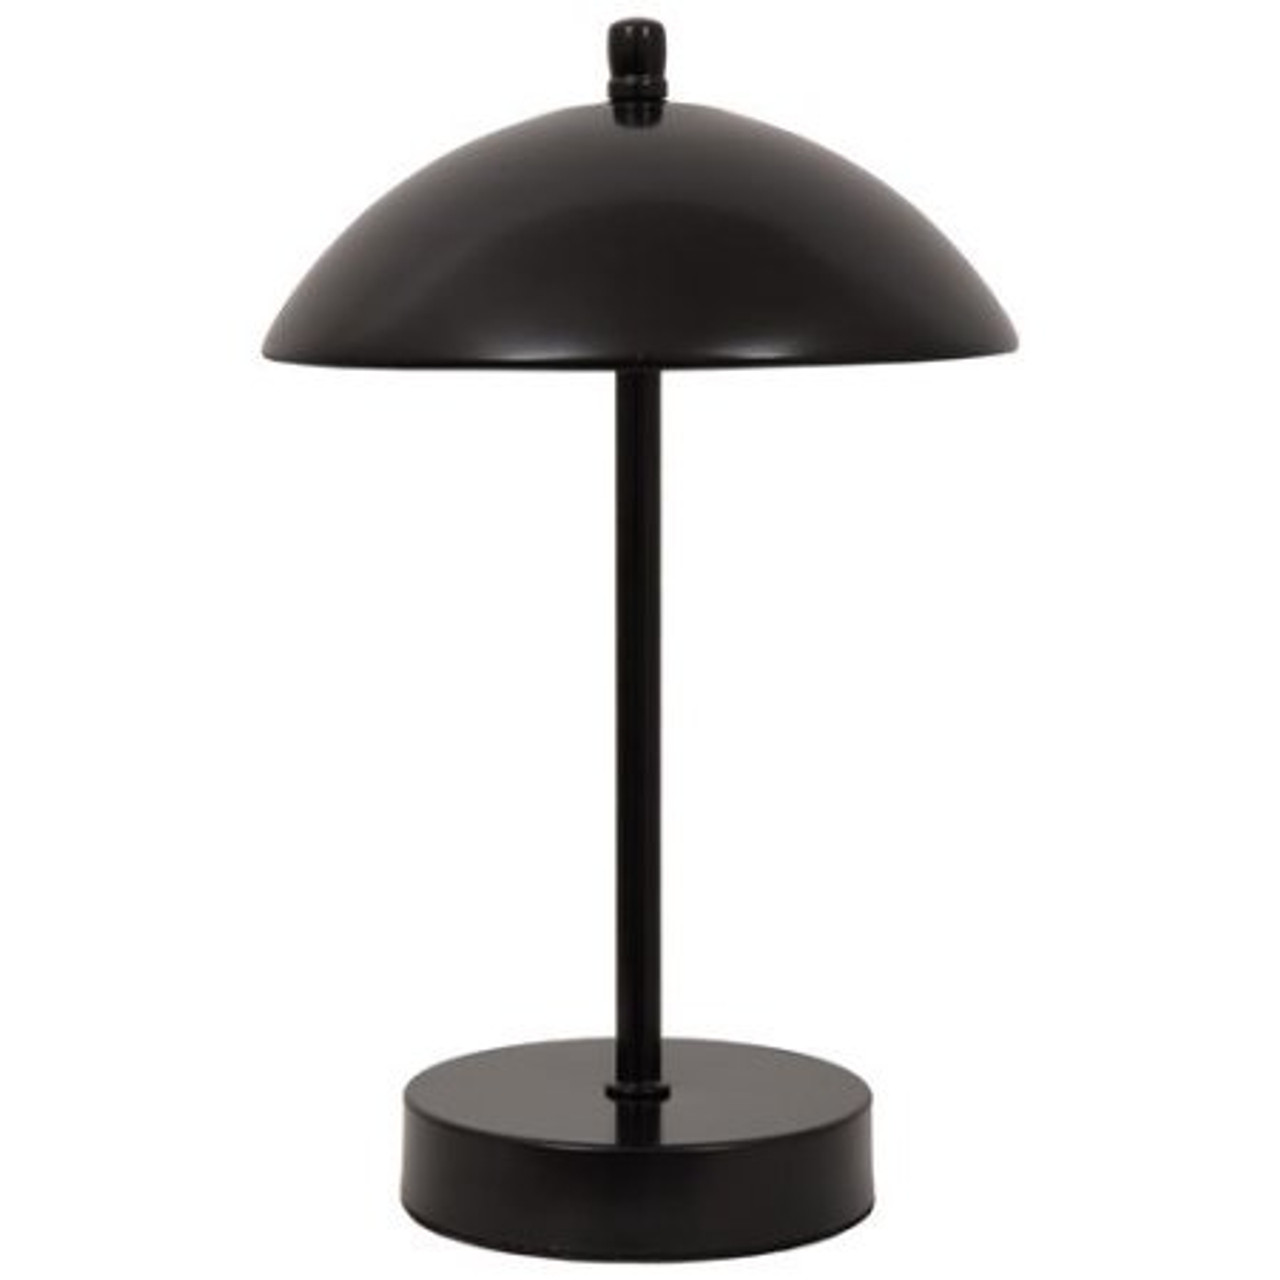 Table Touch Lamp Hidden Camera - SpyAssociates.com